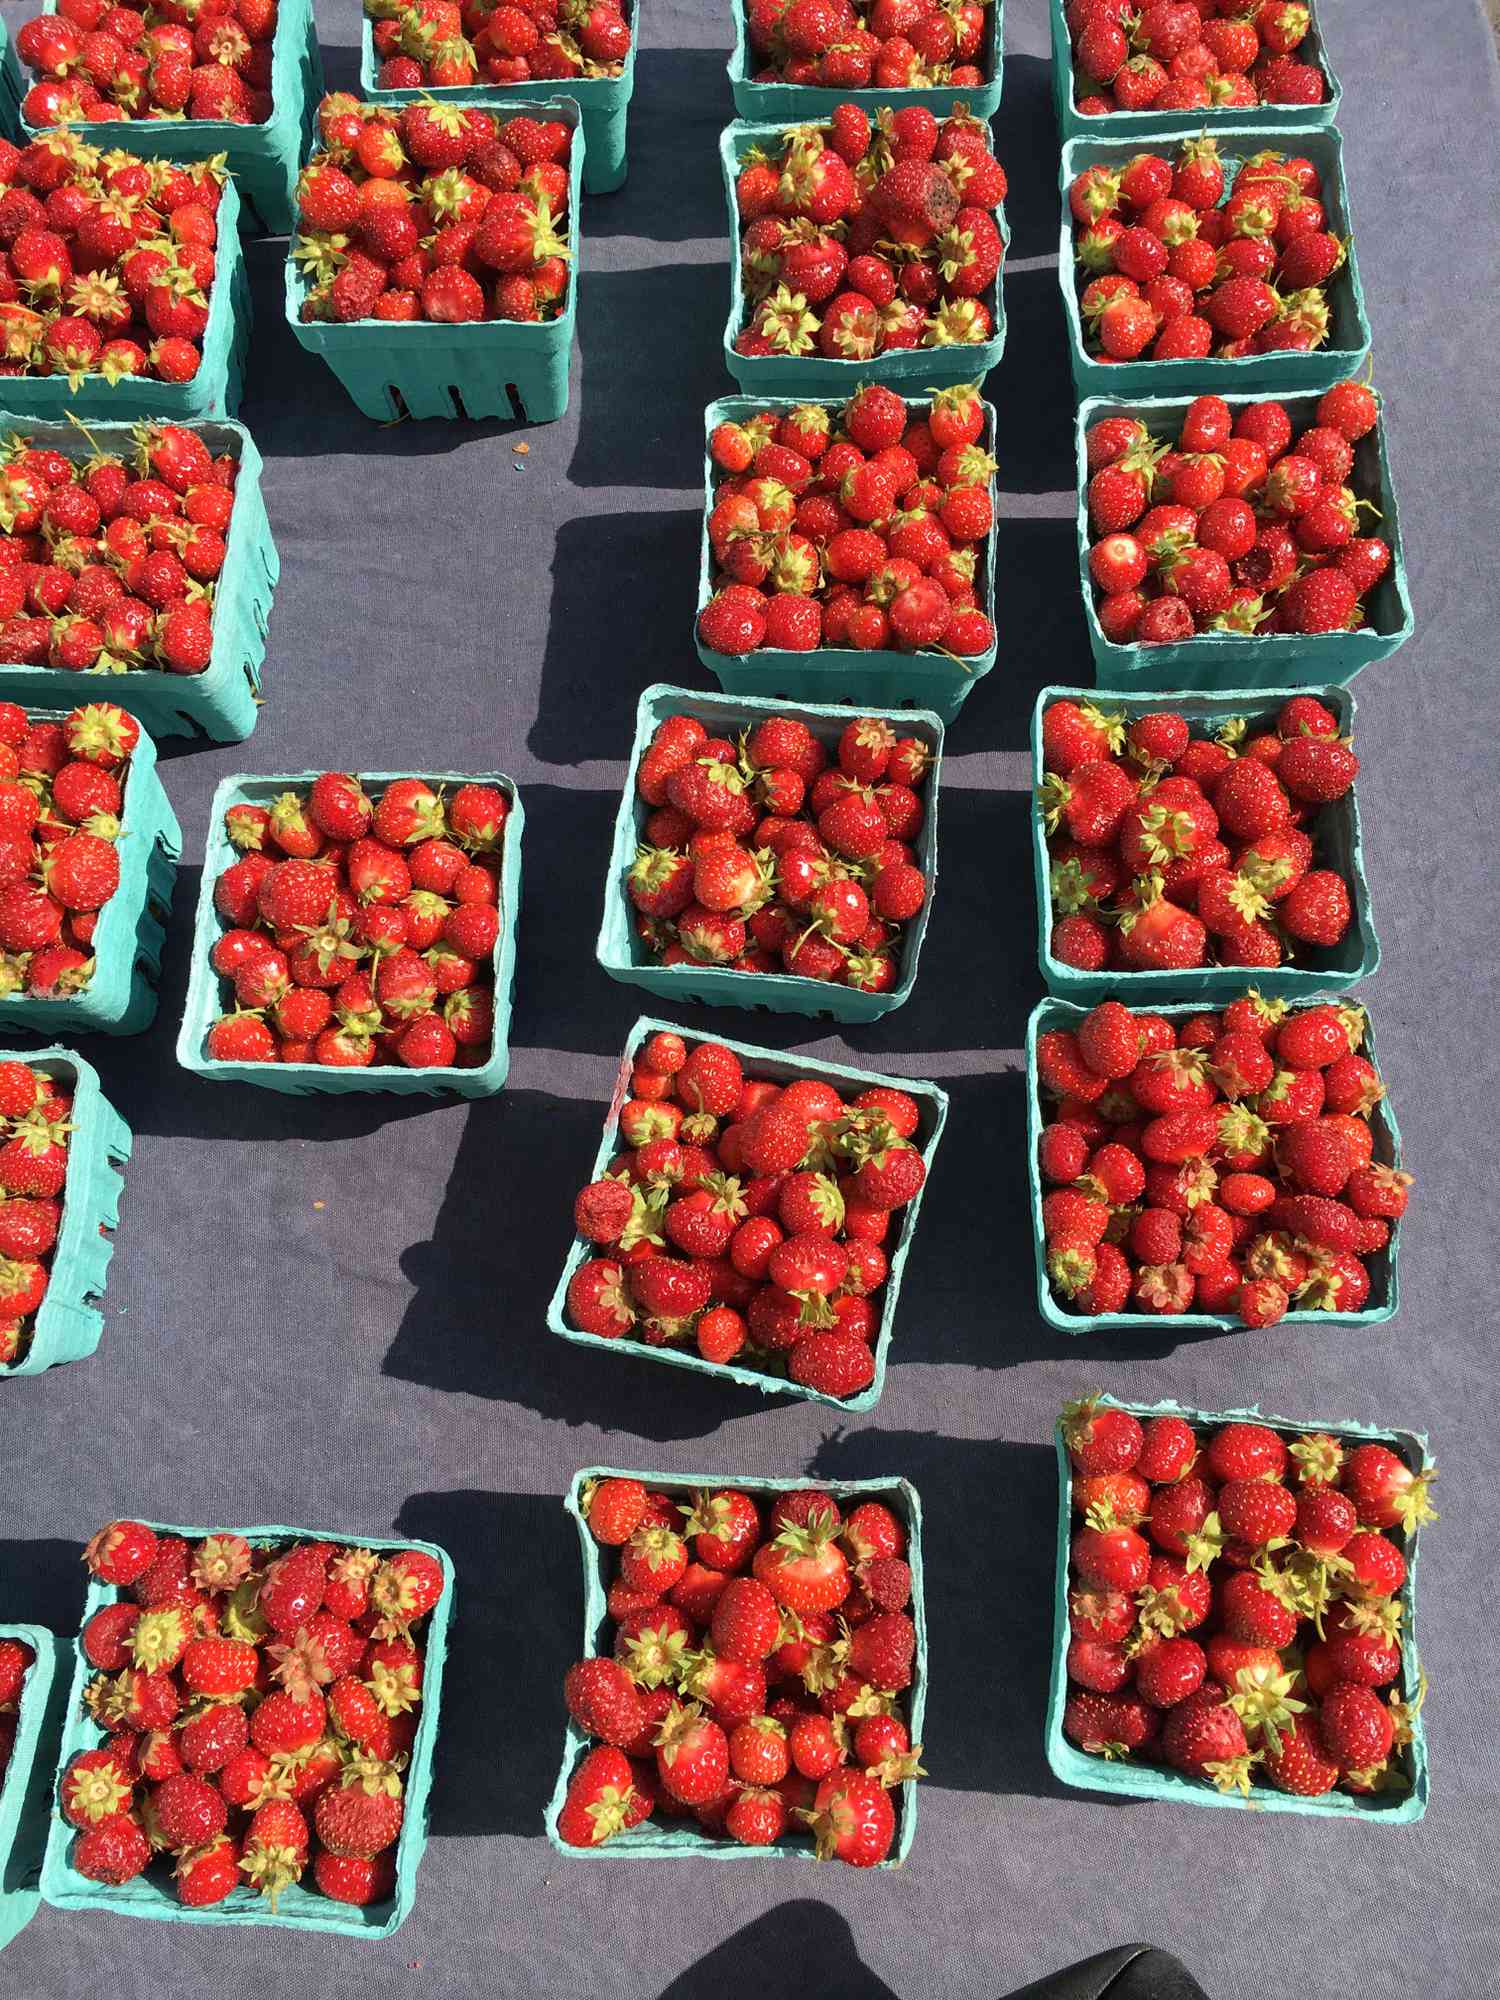 tristar strawberries